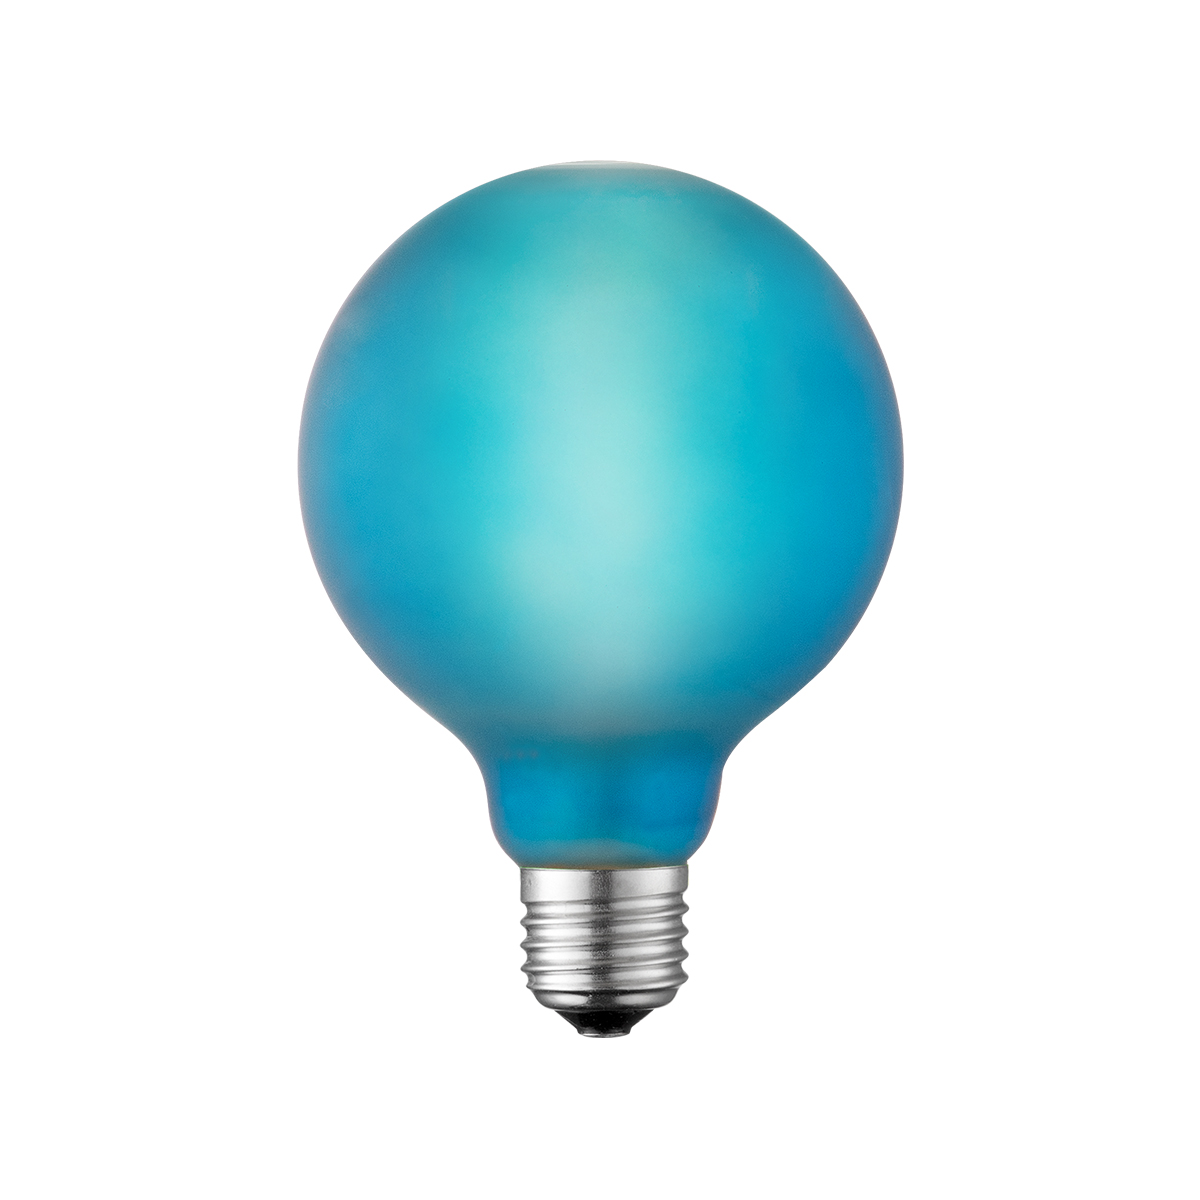 Tangla lighting - TLB-9005-04BL - LED Light Bulb Single Spiral filament - G125 4W blue opal - non dimmable - E27